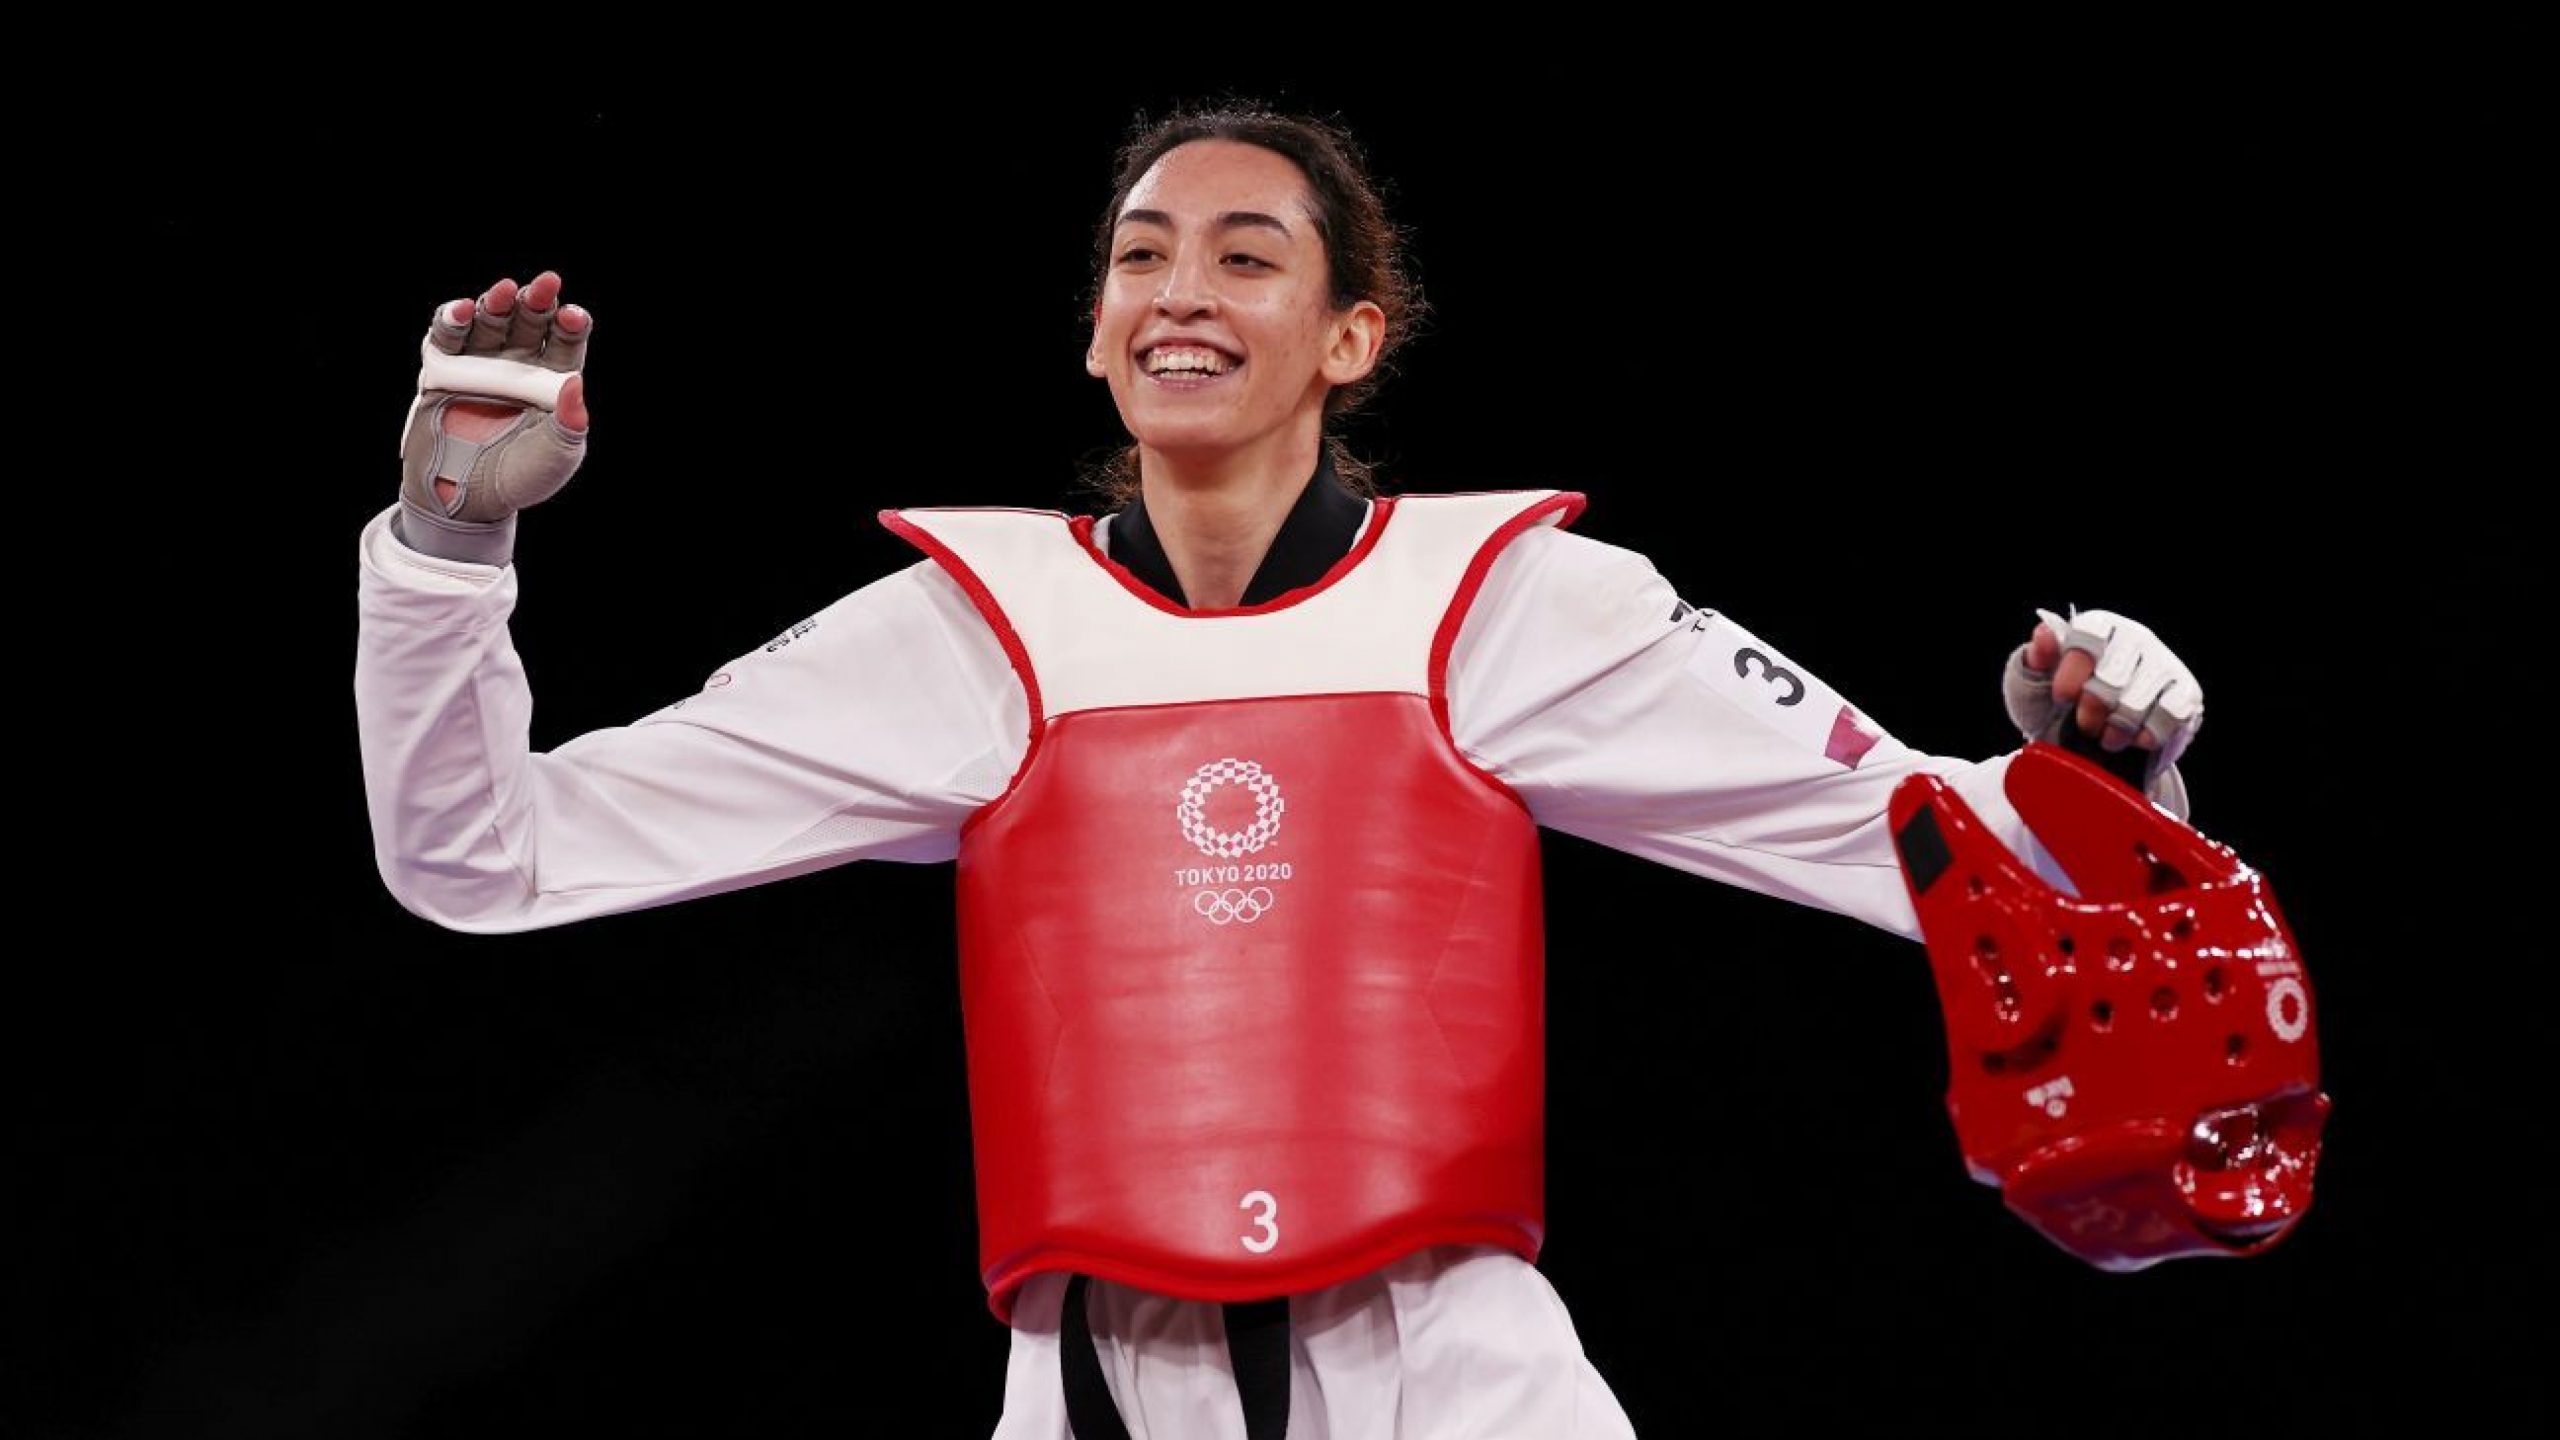 Iranian refugee shocks 2-time taekwondo champ